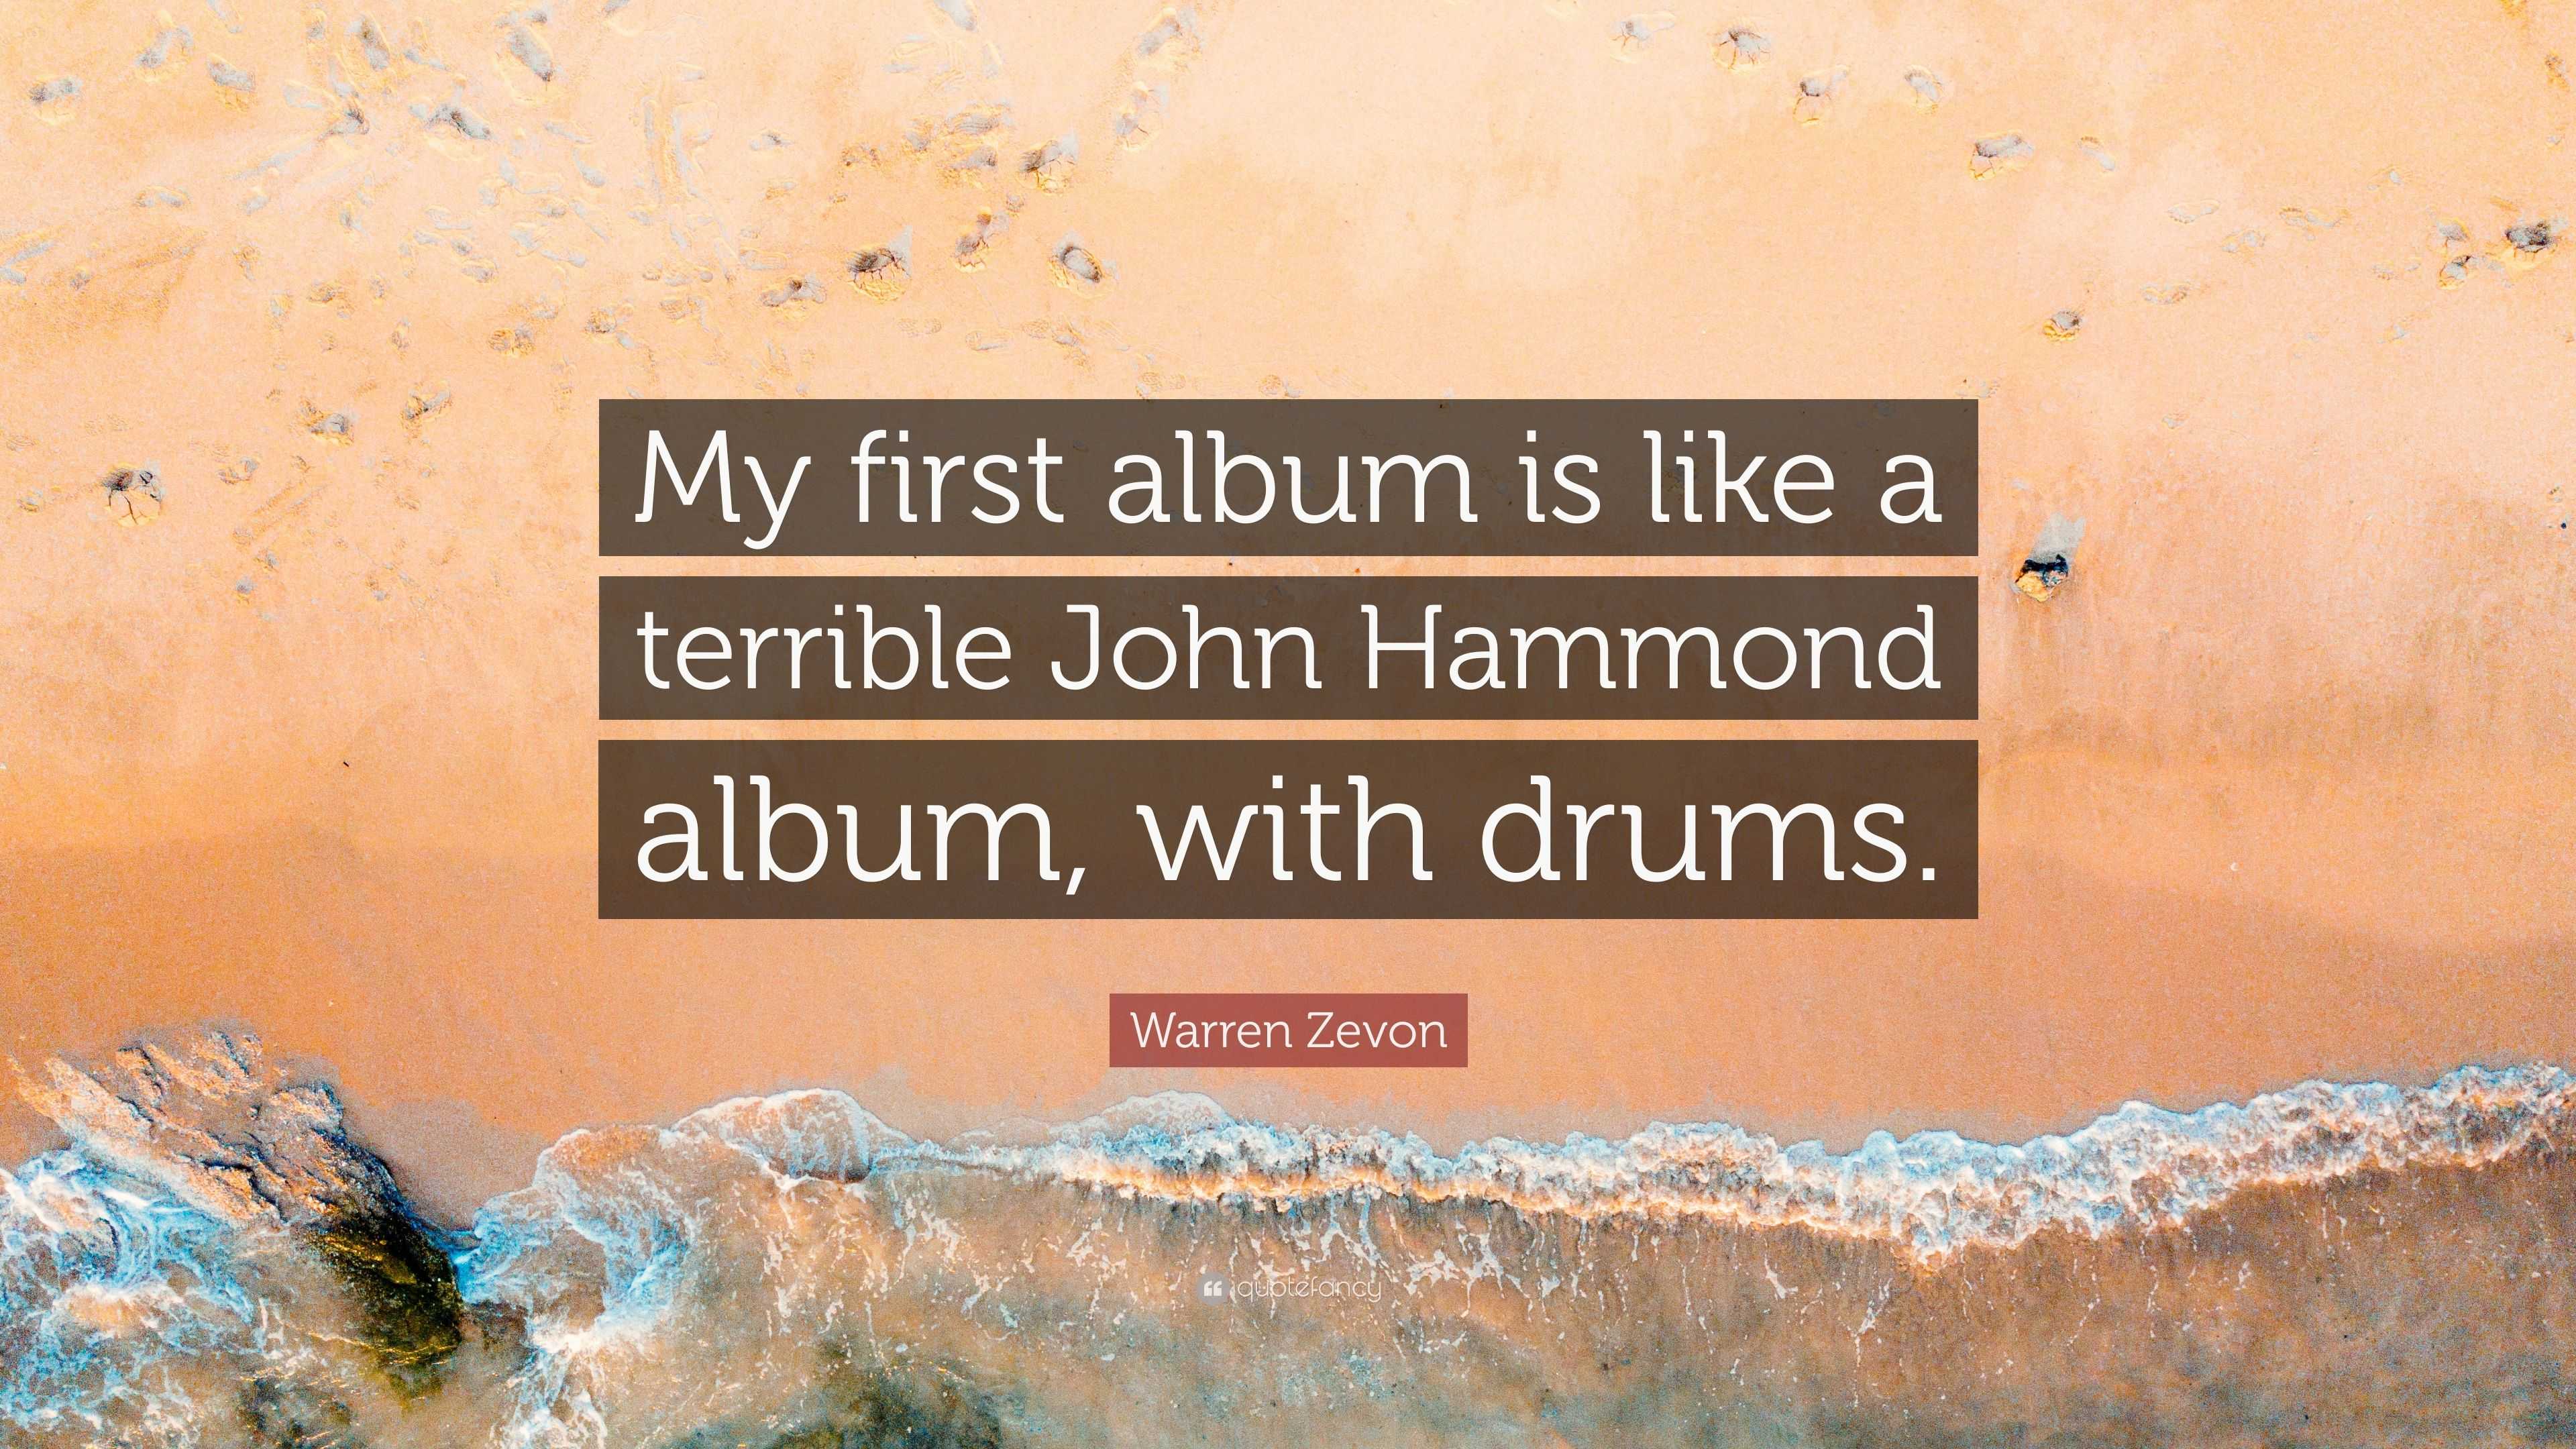 Warren Zevon Quote “my First Album Is Like A Terrible John Hammond Album With Drums” 8022